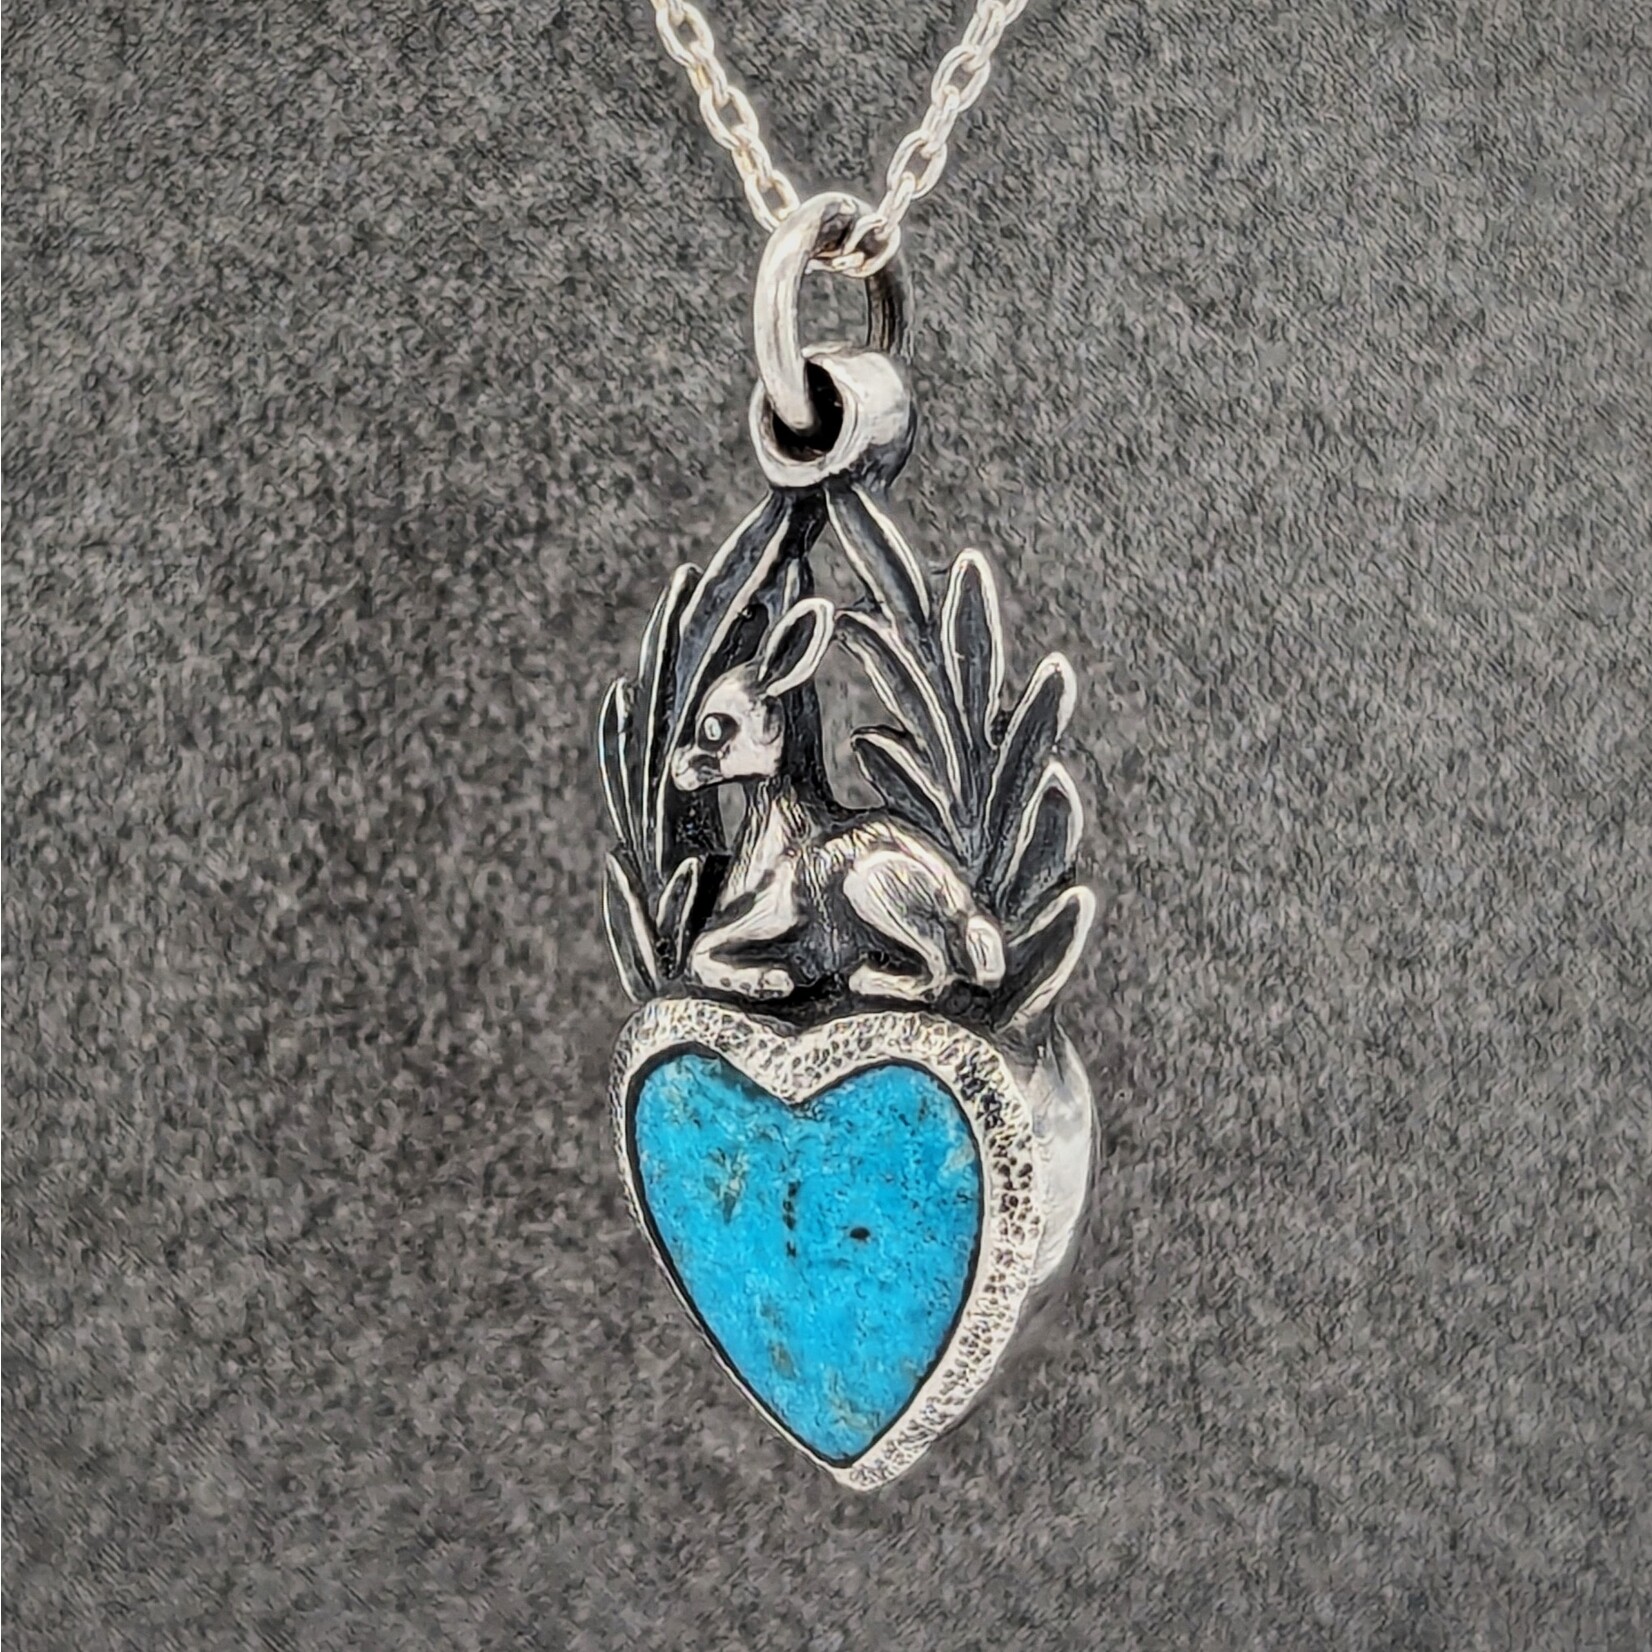 Carrie Nunes Jewelry Baby Deer Heart Pendant w/ Turquoise